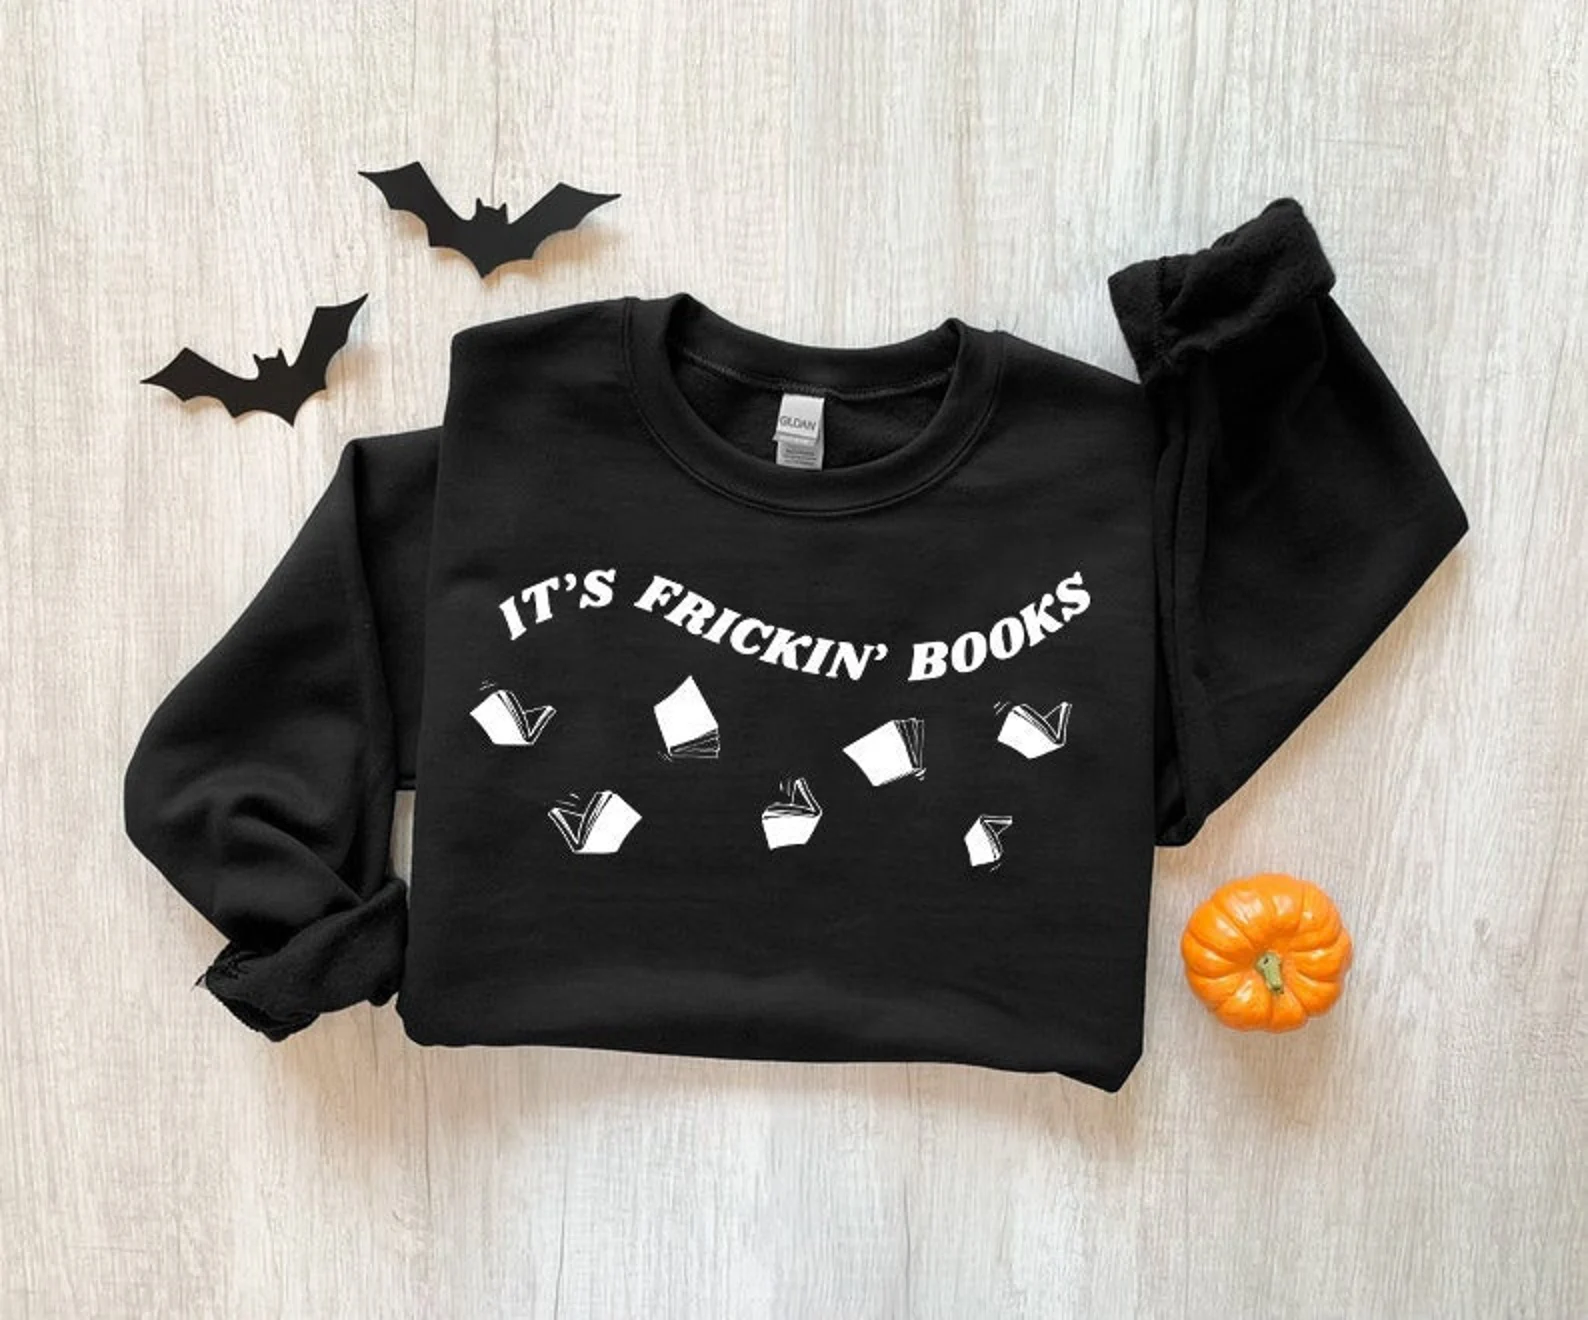 Black sweatshirt with books shaped like bats. Text reads "it's frickin' books."